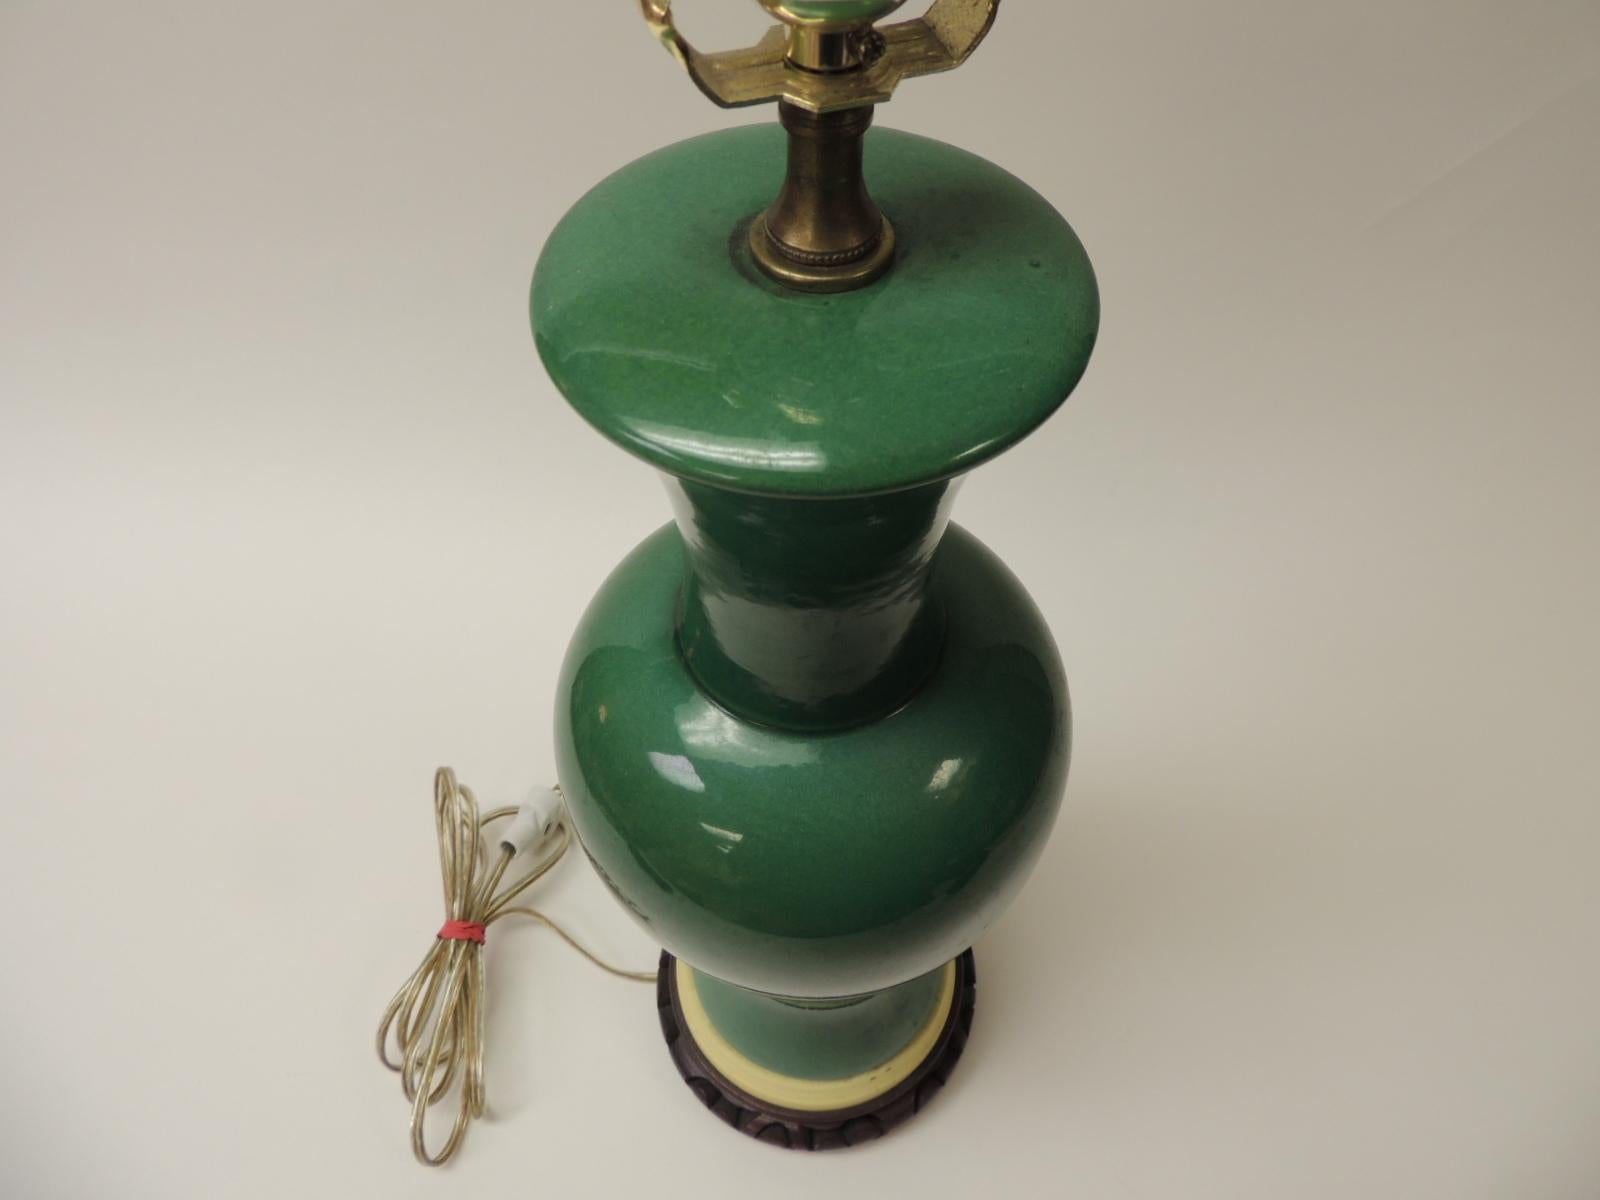 Vintage Green Ceramic Lamp with Brass Fittings (Handgefertigt)